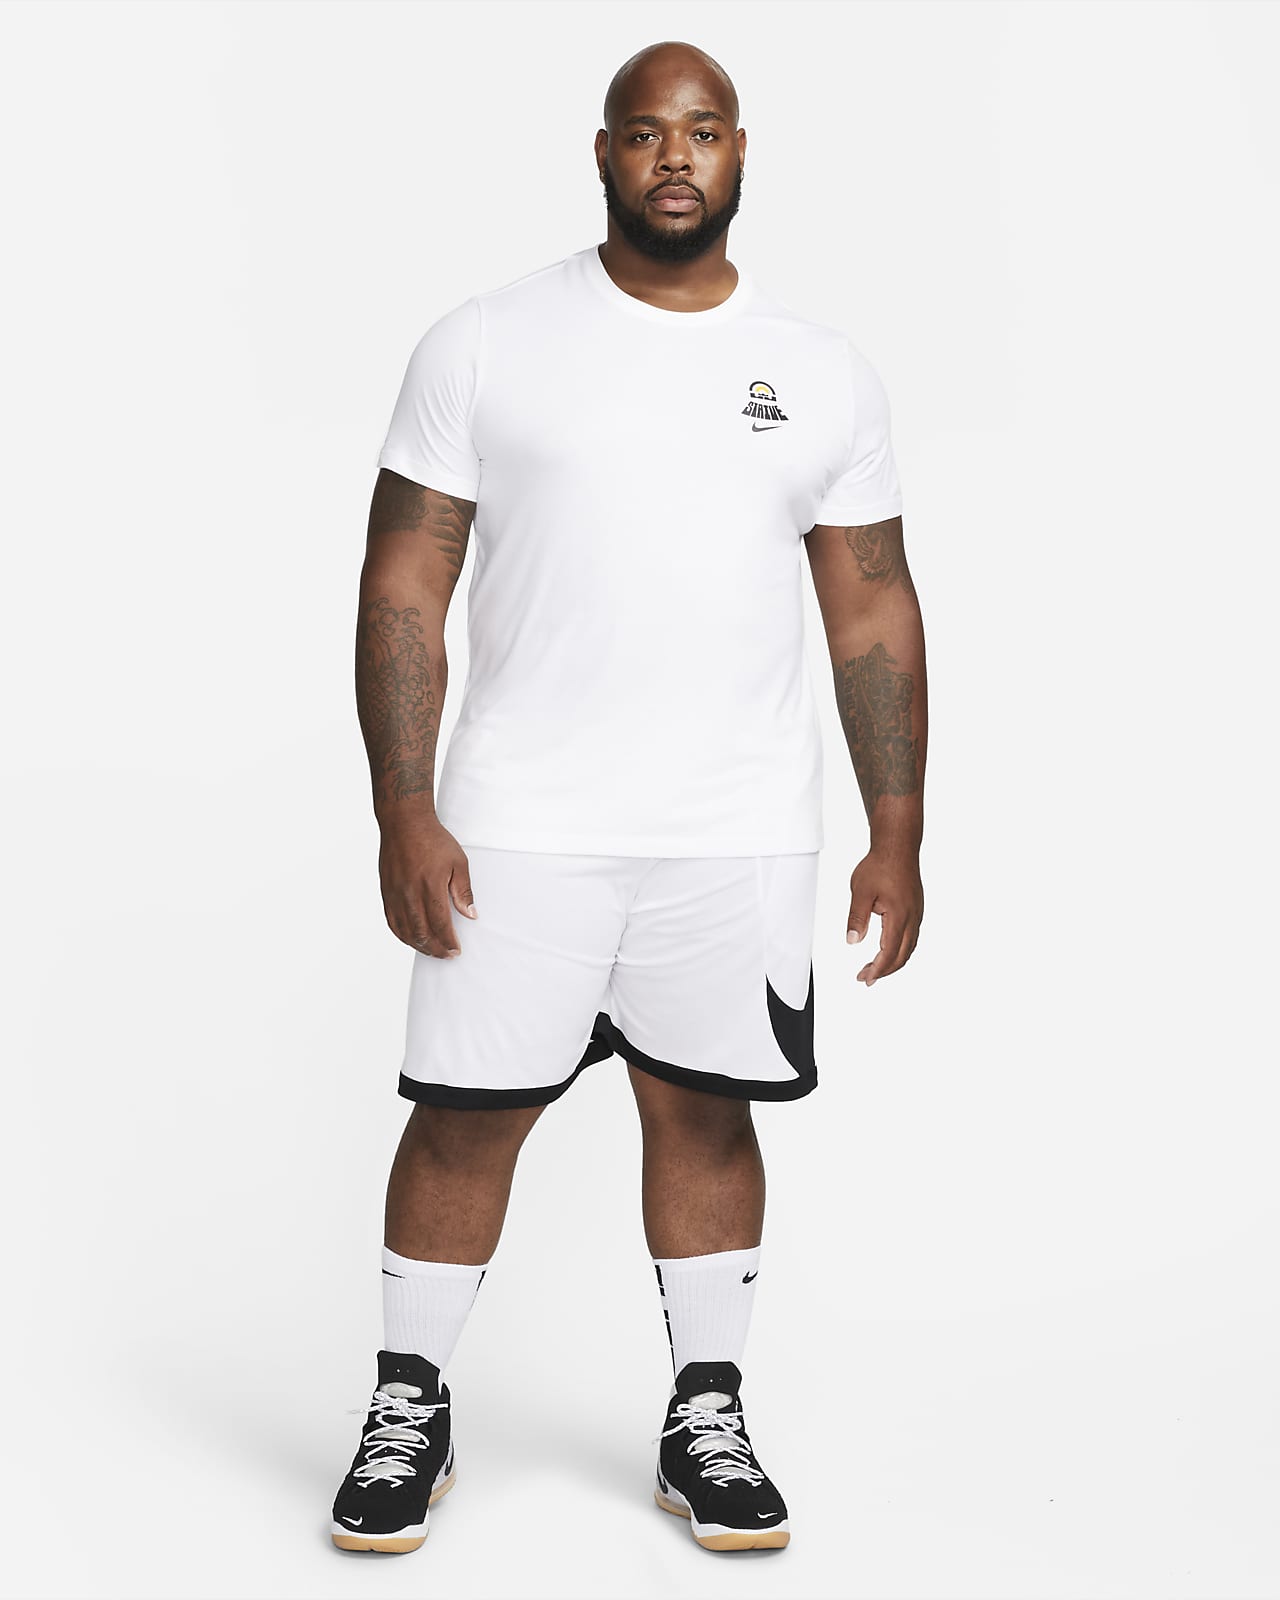 LeBron Nike Dri-FIT Men's Basketball T-Shirt. Nike HR